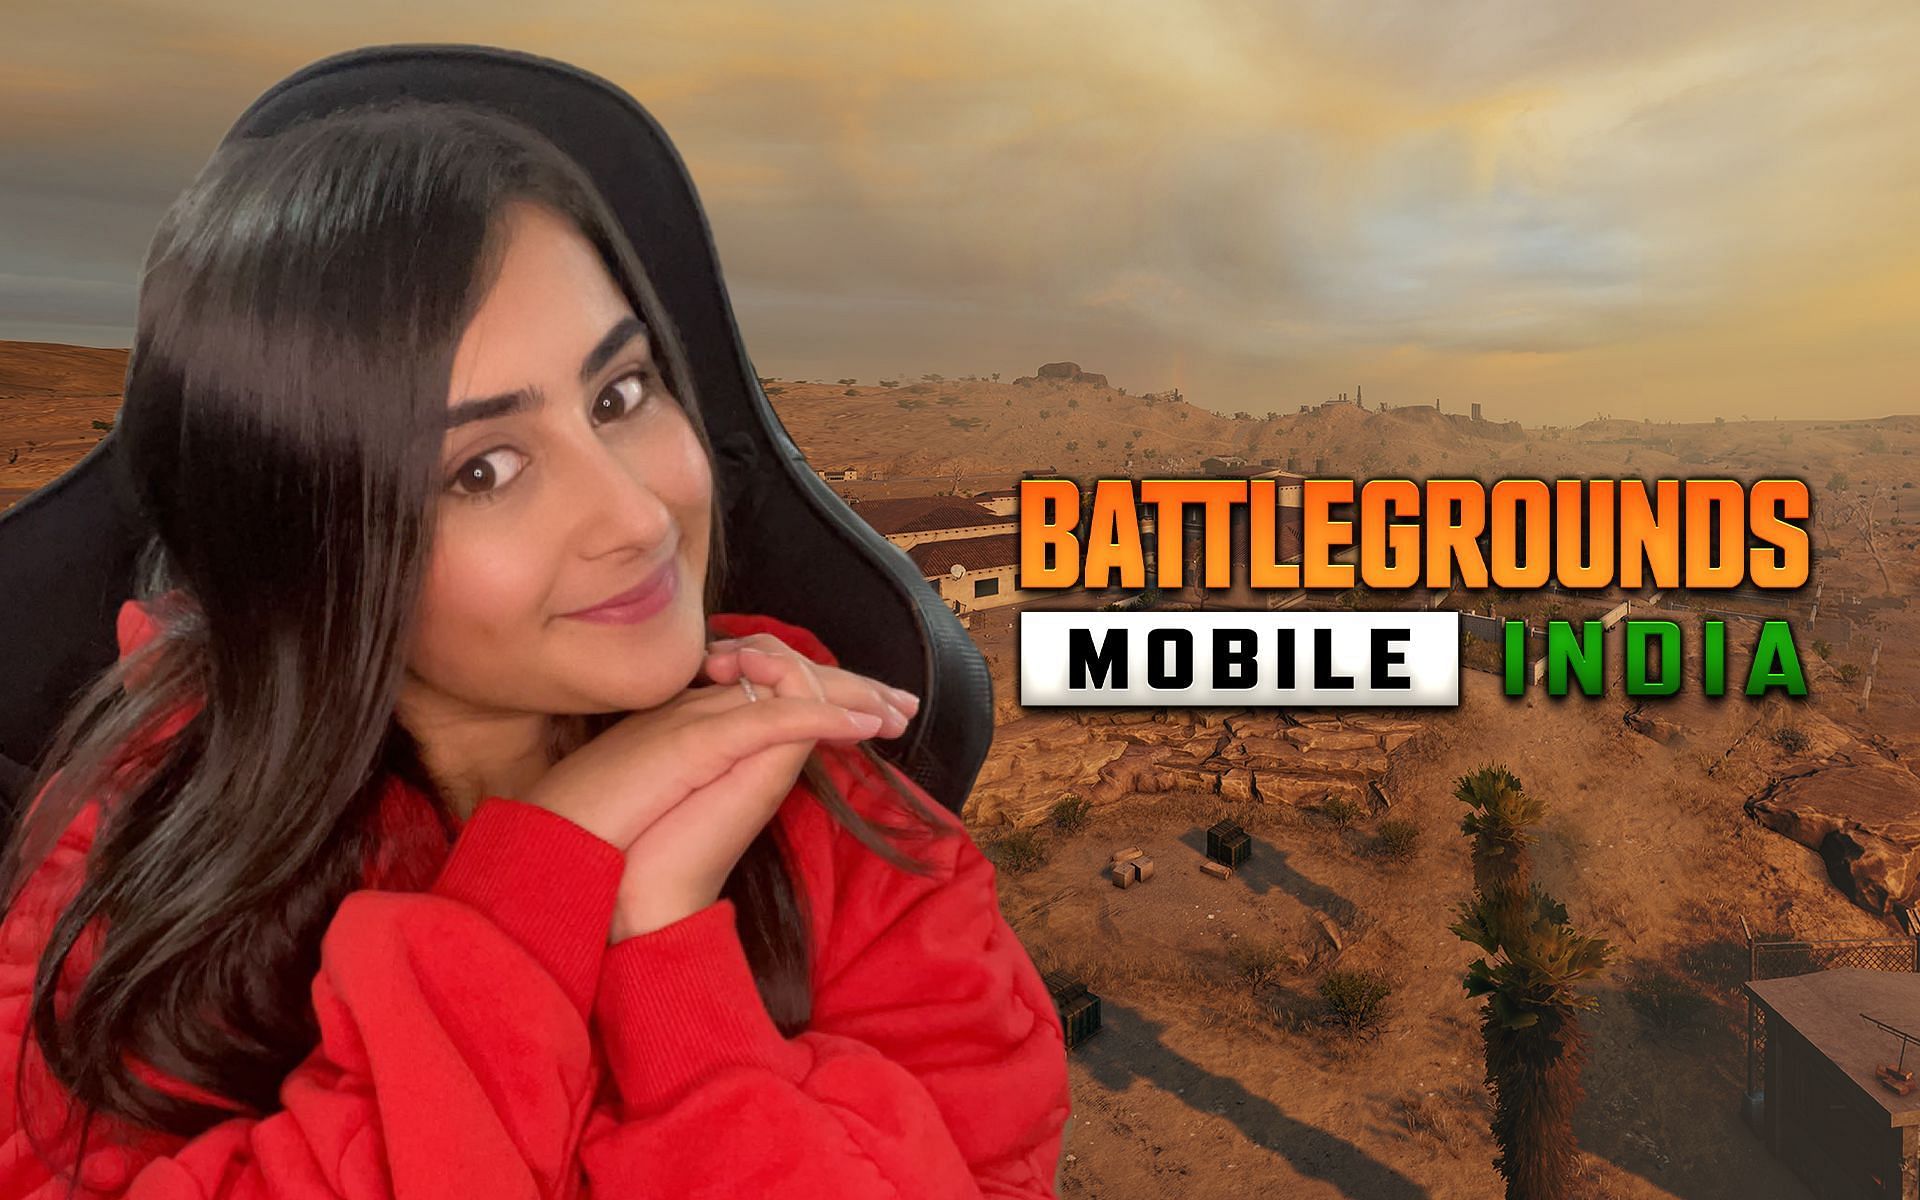 Icieee is a Battlegrounds Mobile India (BGMI) content creator (Image via Sportskeeda)